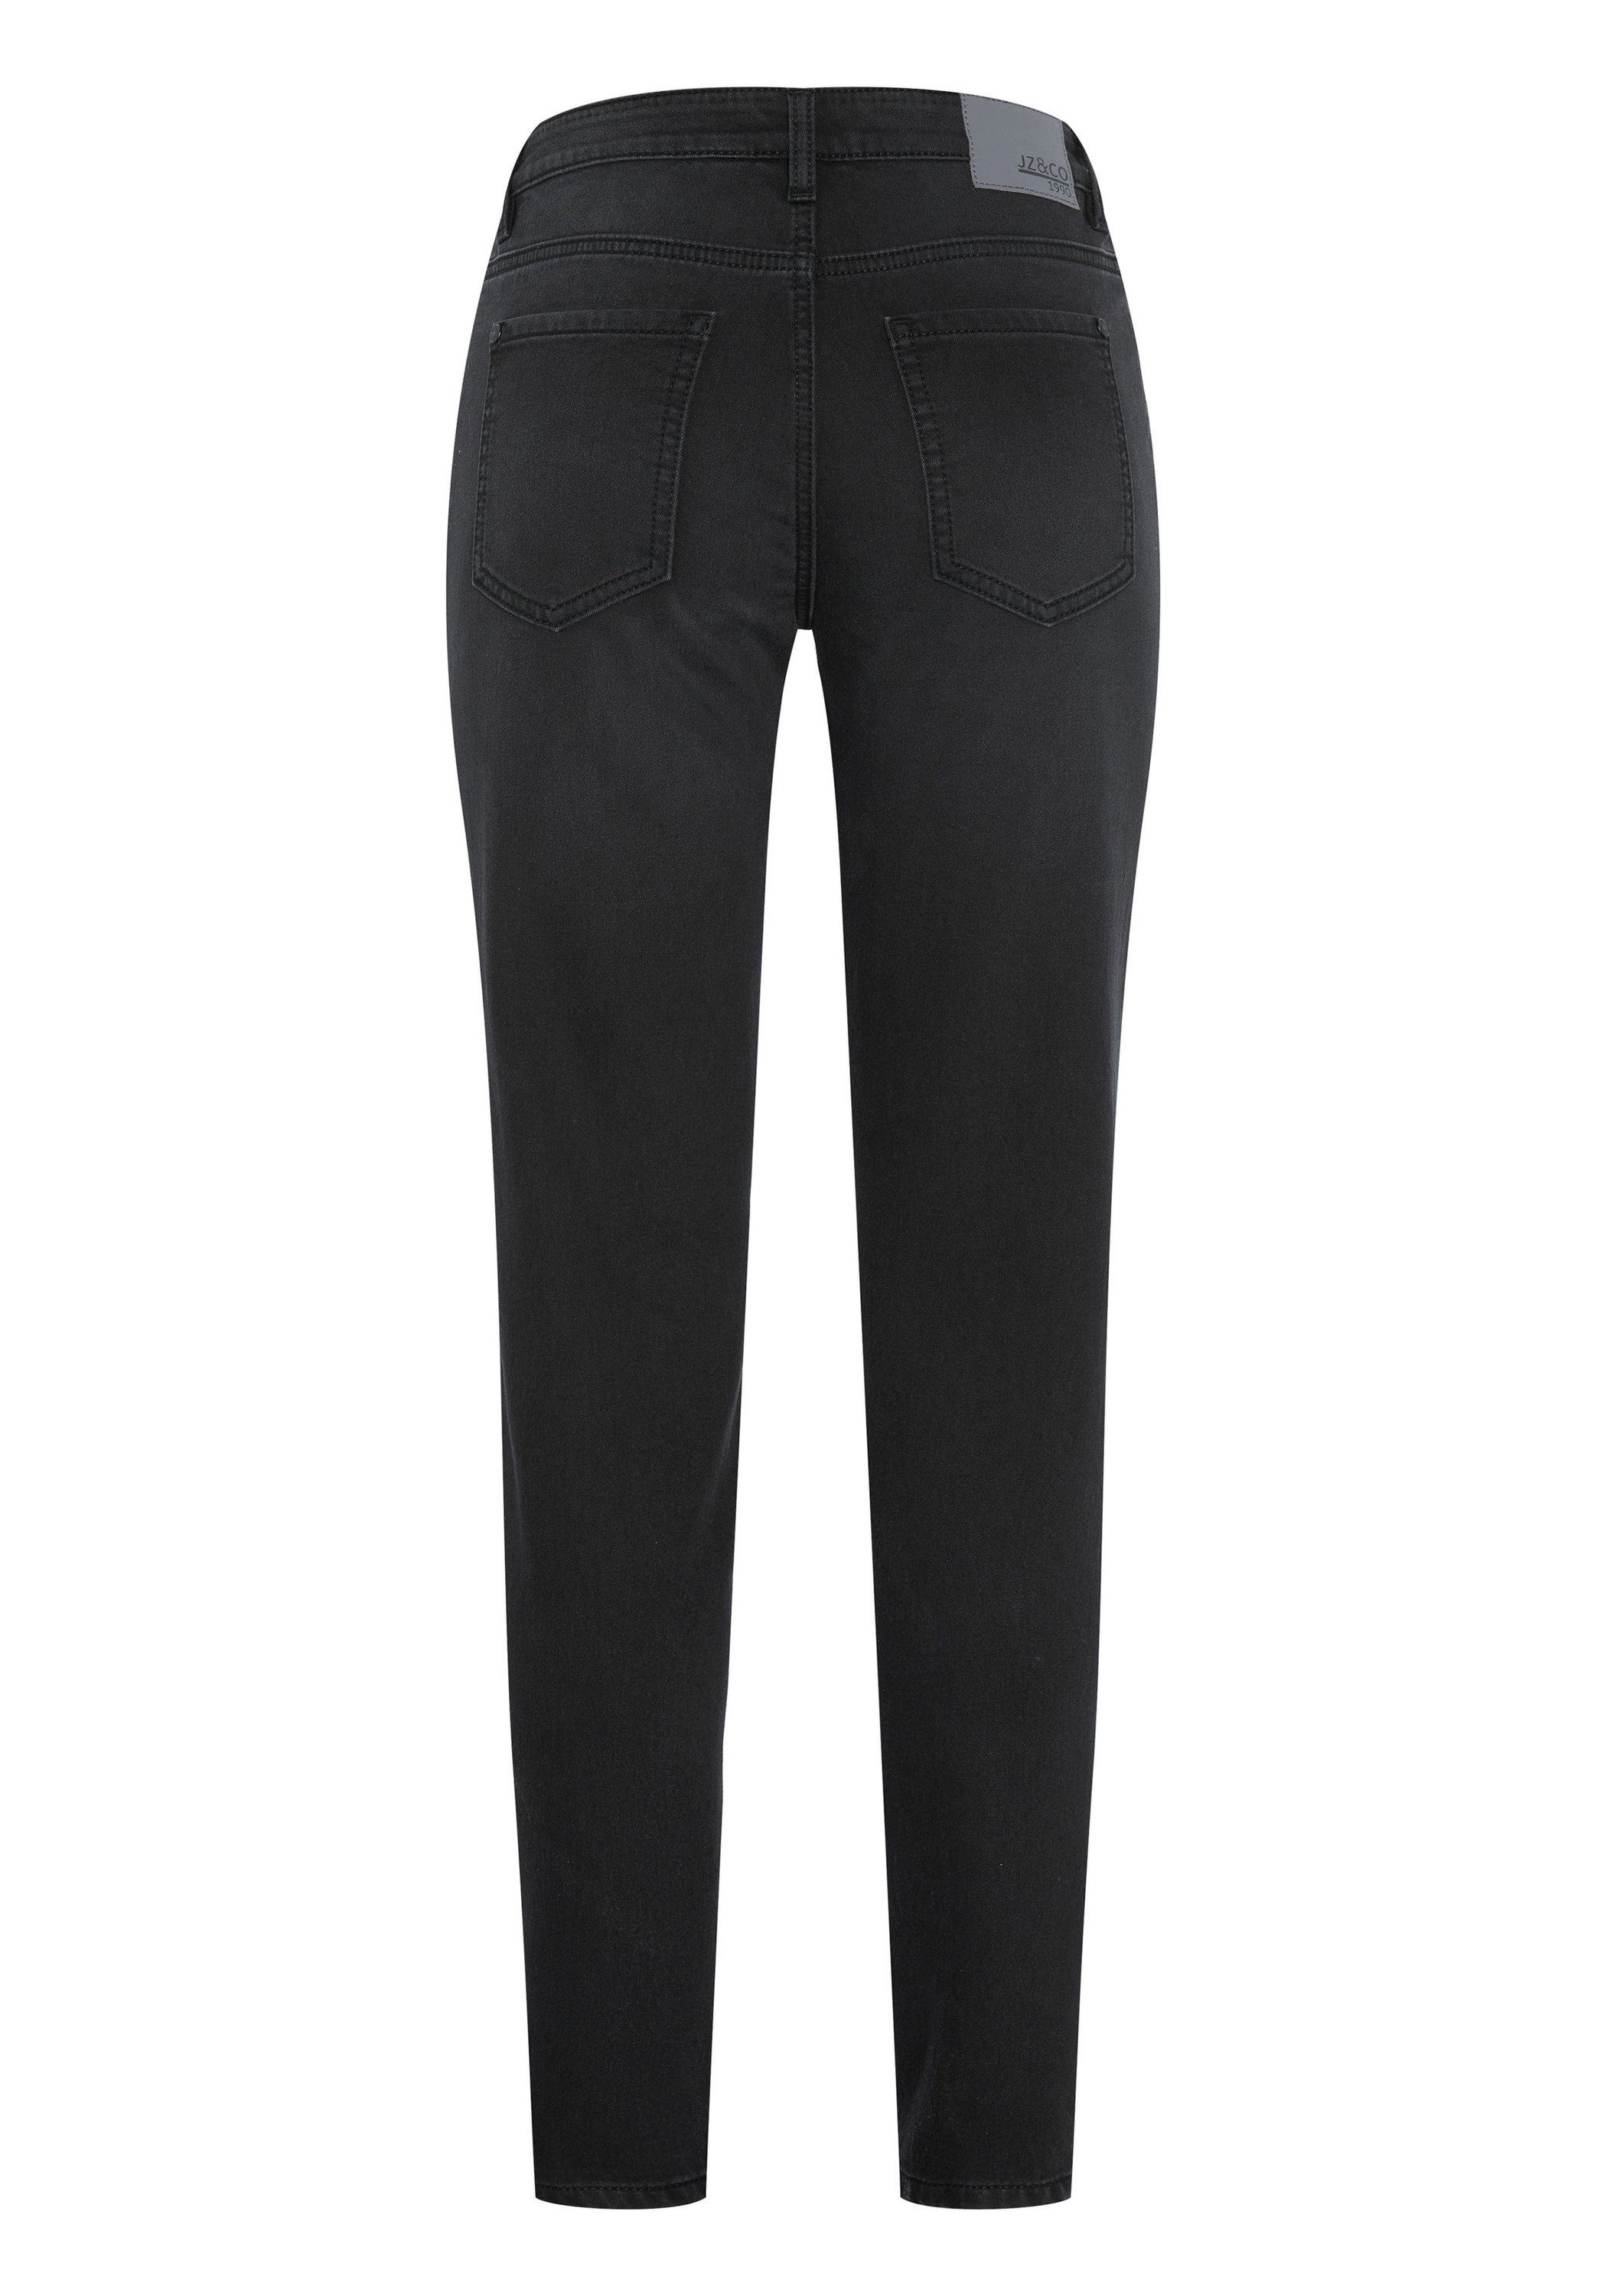 JZ & Slim-fit-Jeans Waschung Black mit Co 90